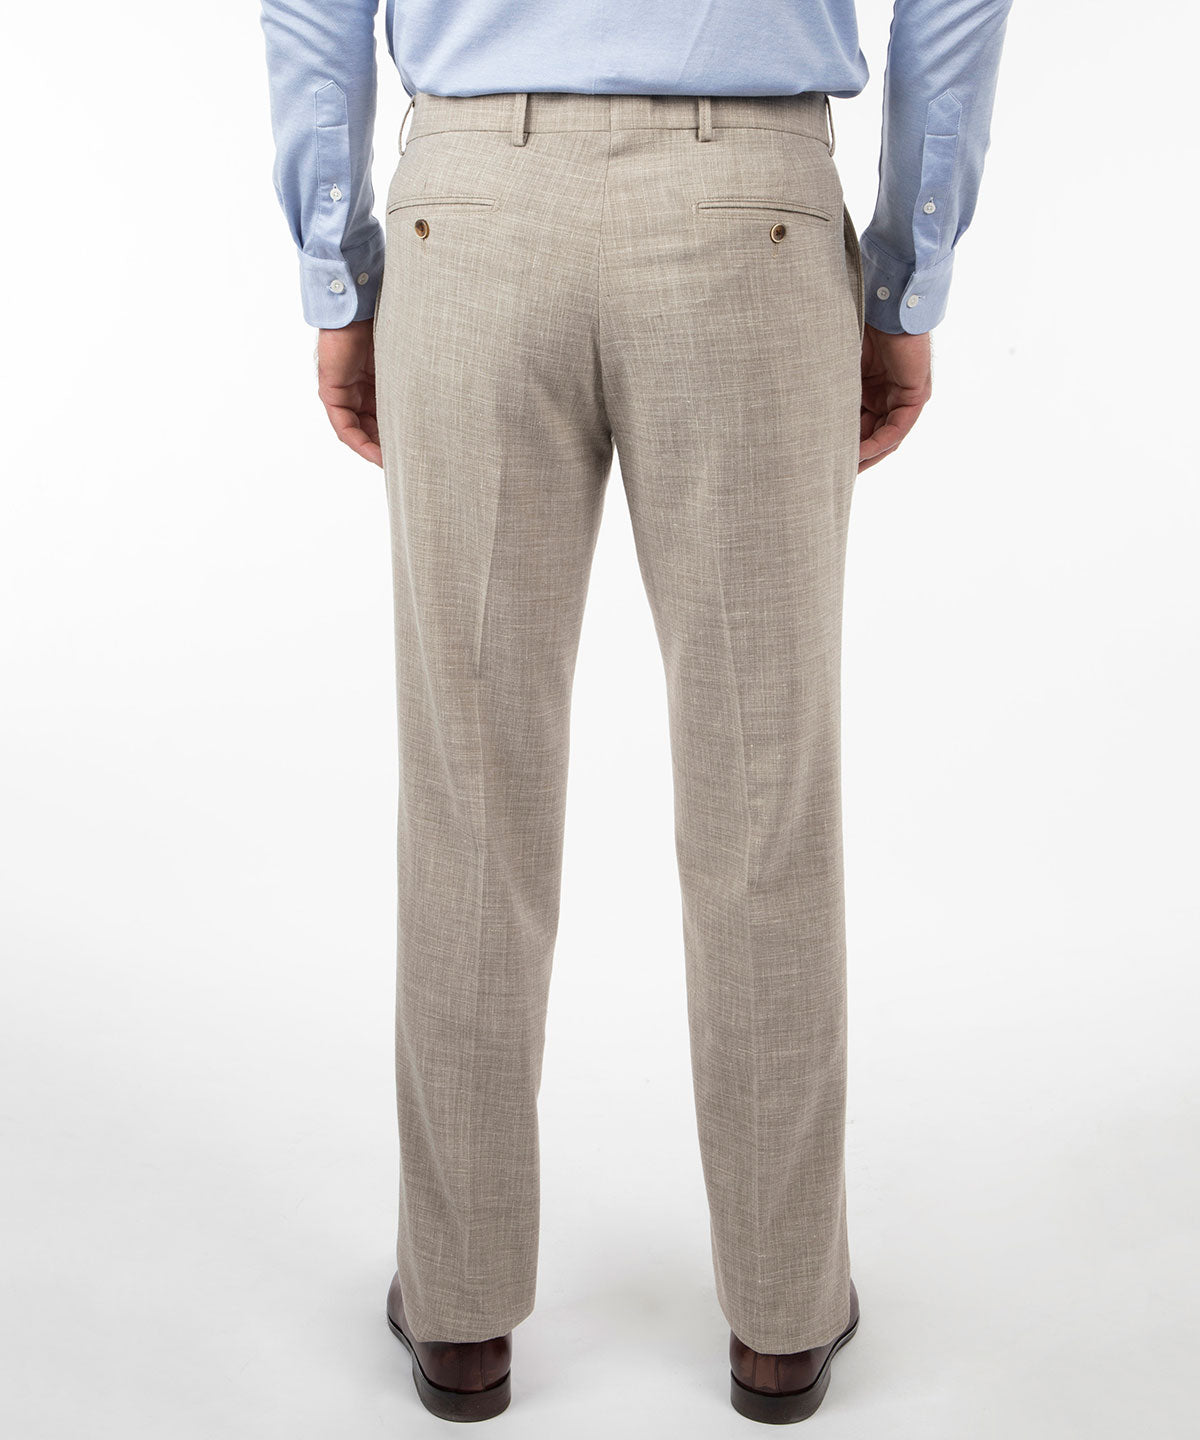 Men's Cream Linen Tailored Italian Suit Pants - 1913 Collection